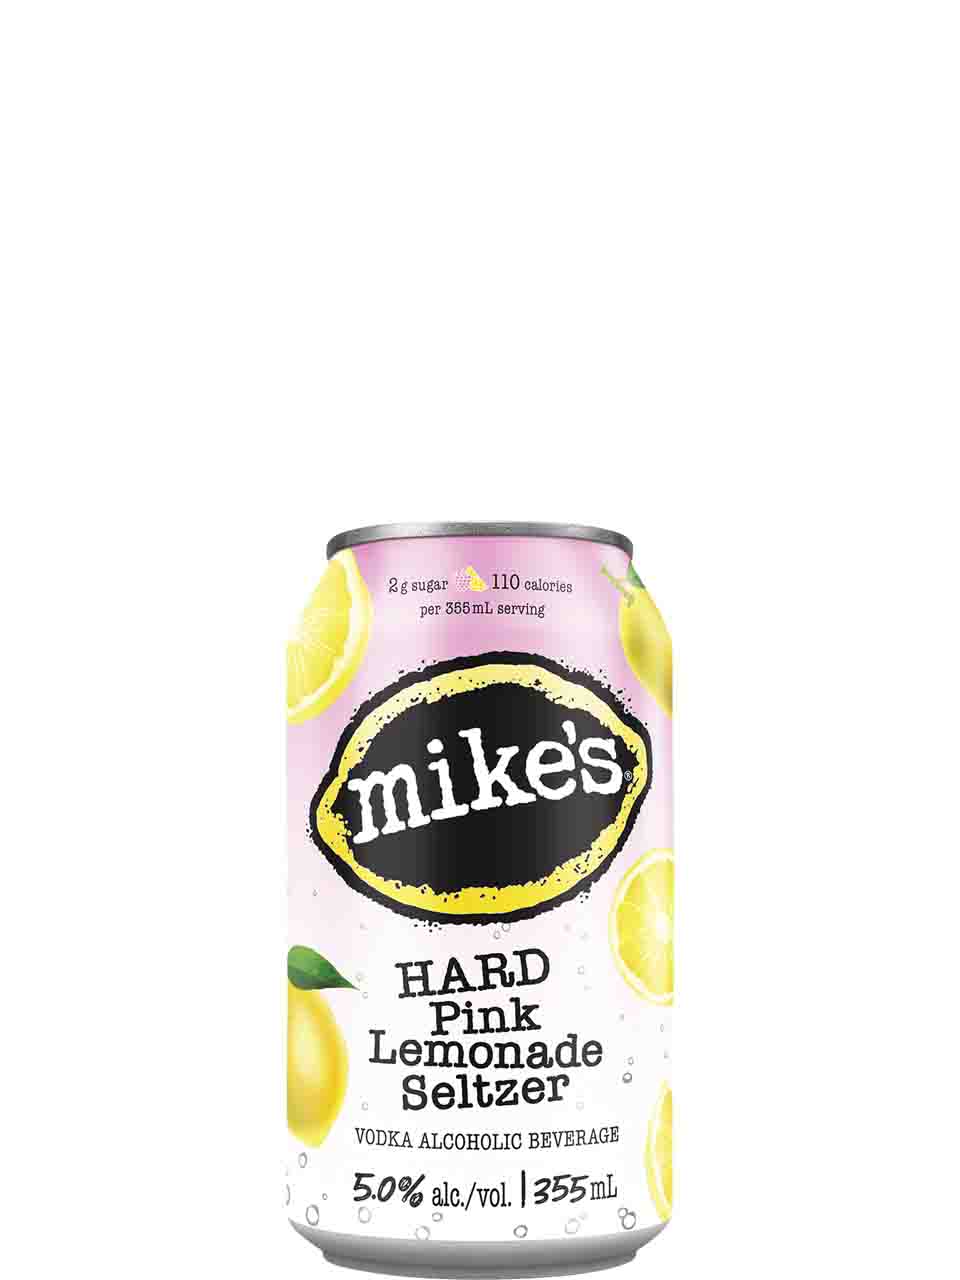 Mike's Hard Pink Lemonade Seltzer 6 Pack Cans